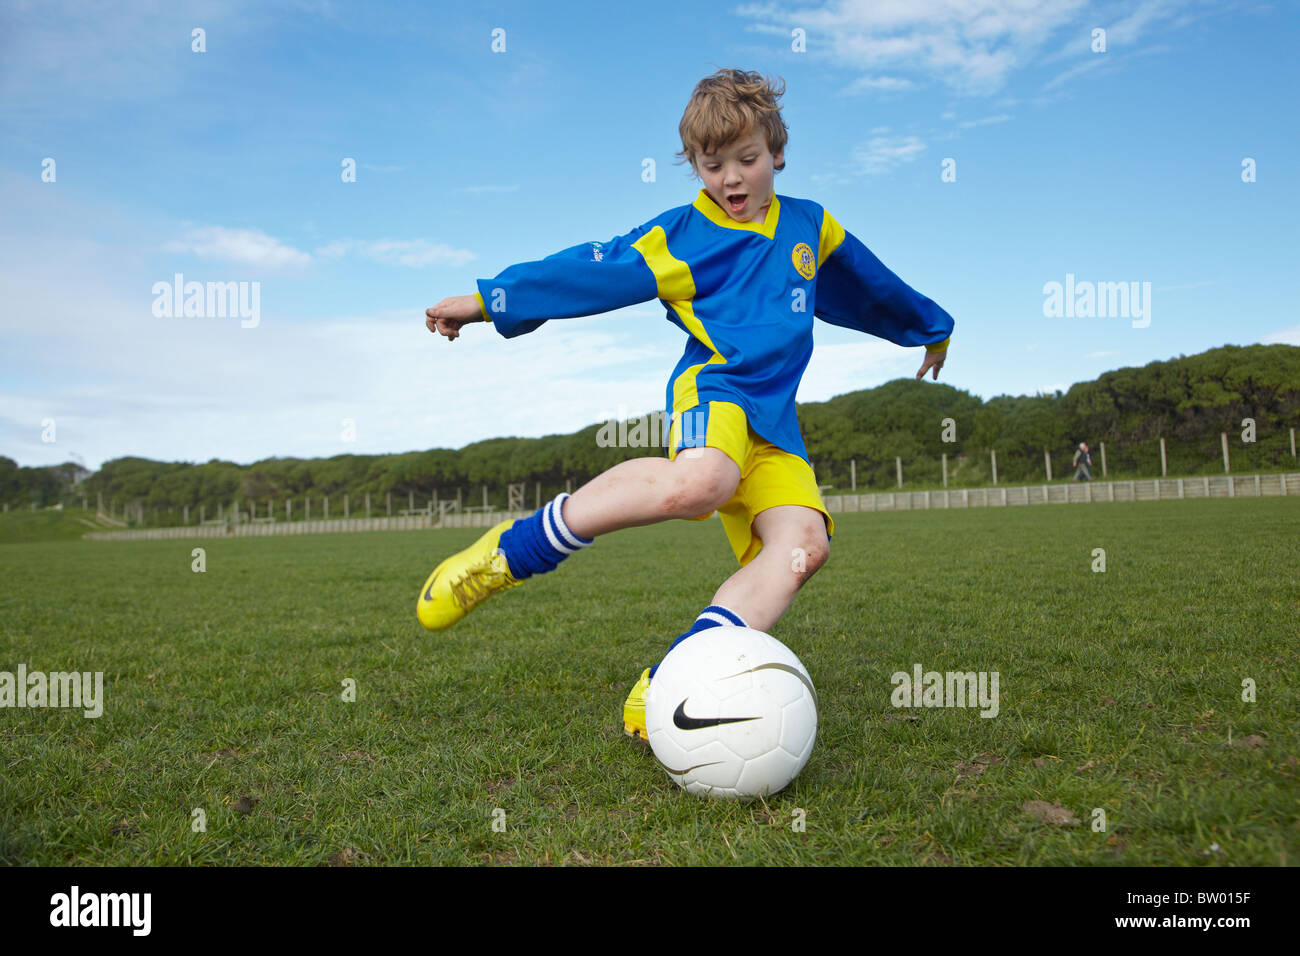 Young boy kicking football Stock Photo